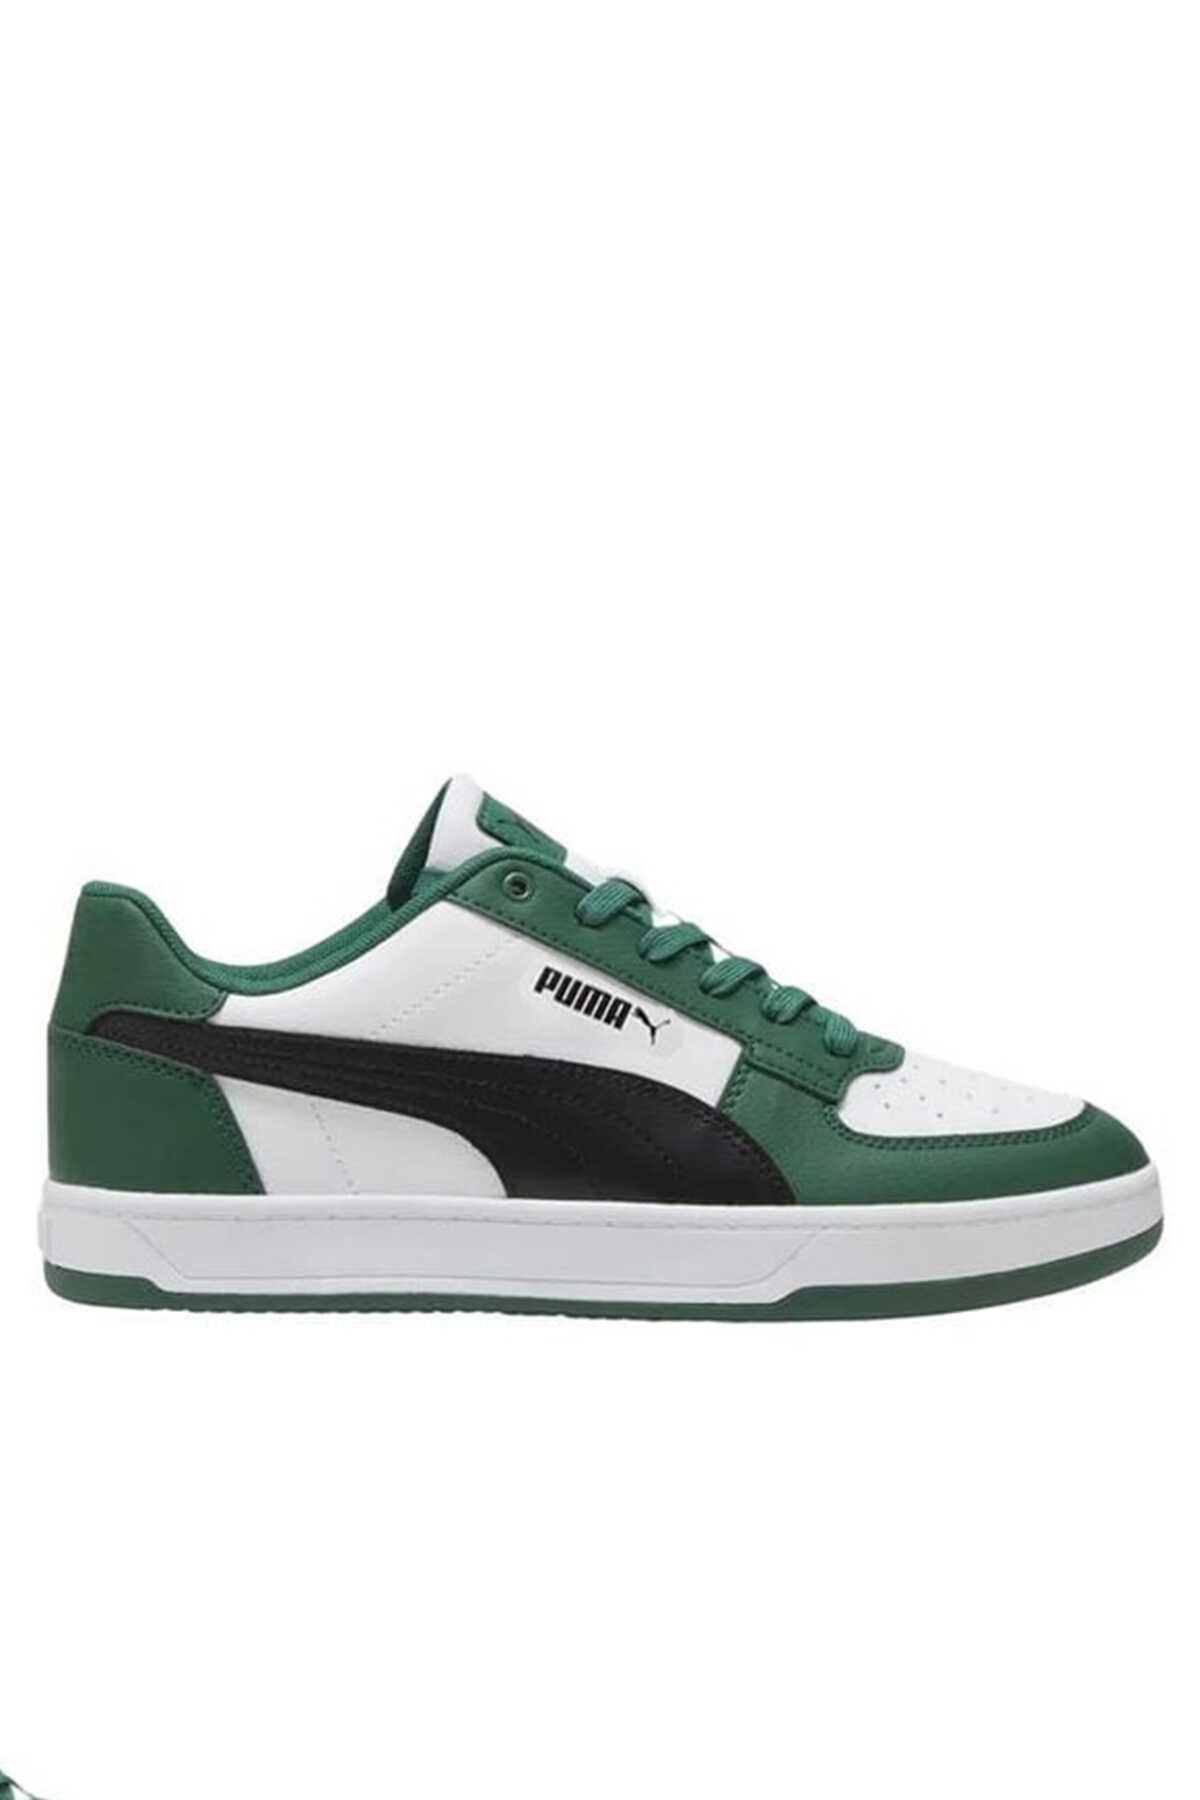 Puma - Puma Caven 2.0 Unisex Sneaker Ayakkabı Yeşil / Beyaz / Siyah